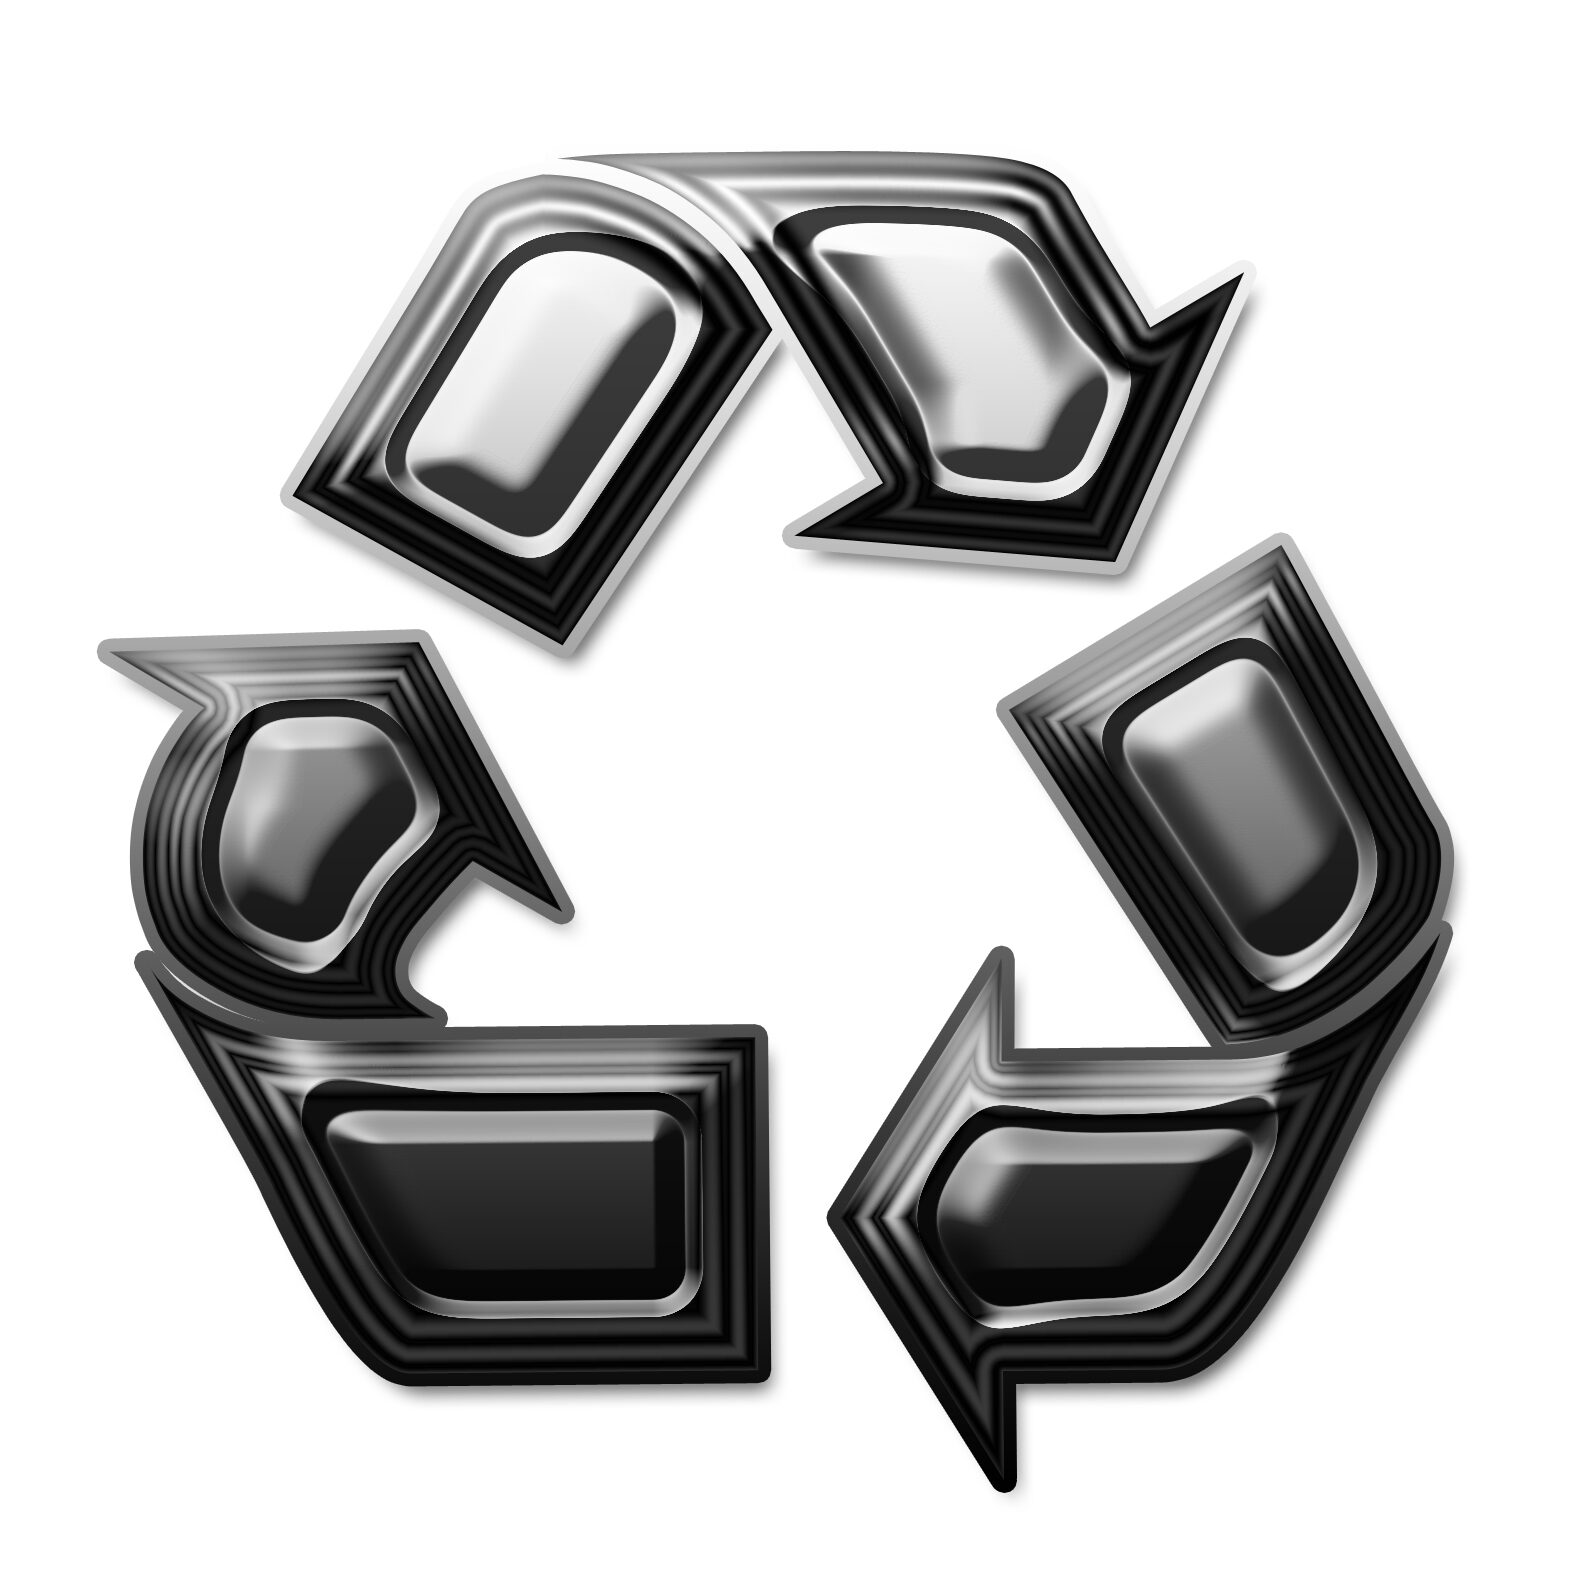 recycling-pictogram-3-1159892.jpg